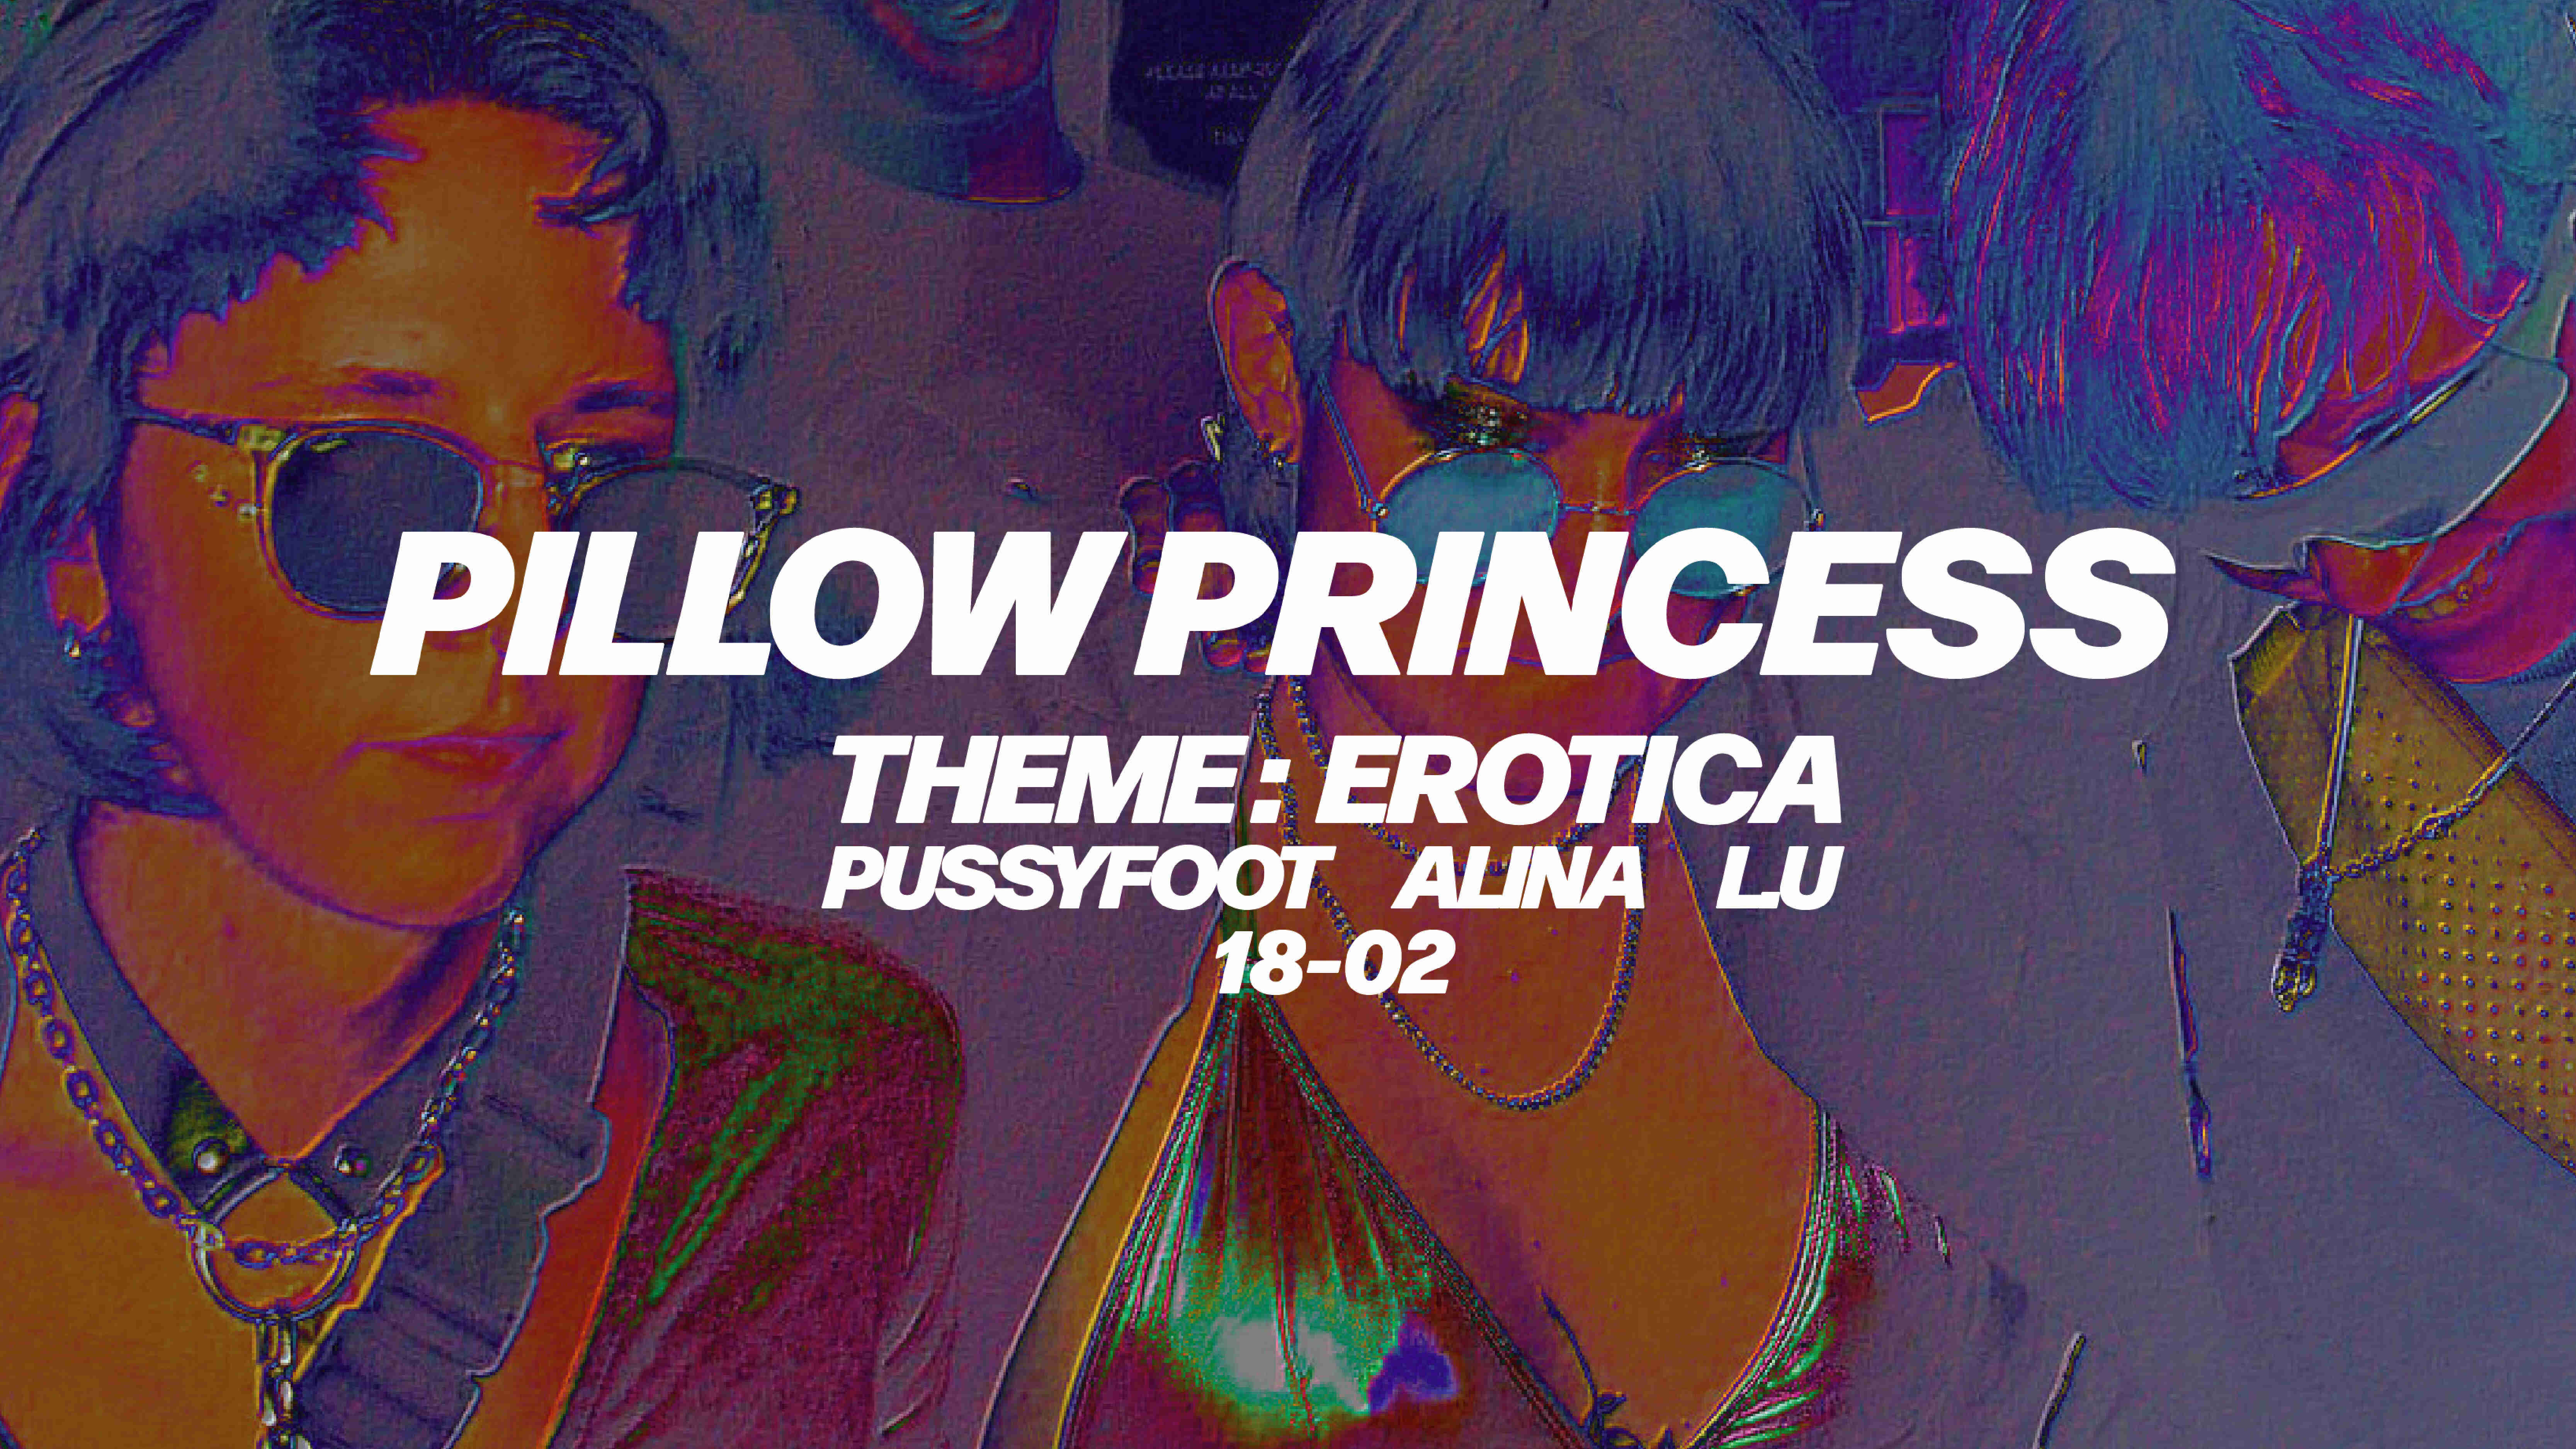 Pillow Princess 5 Erotica At Gonzos Tea Room Norwich On 18th Feb